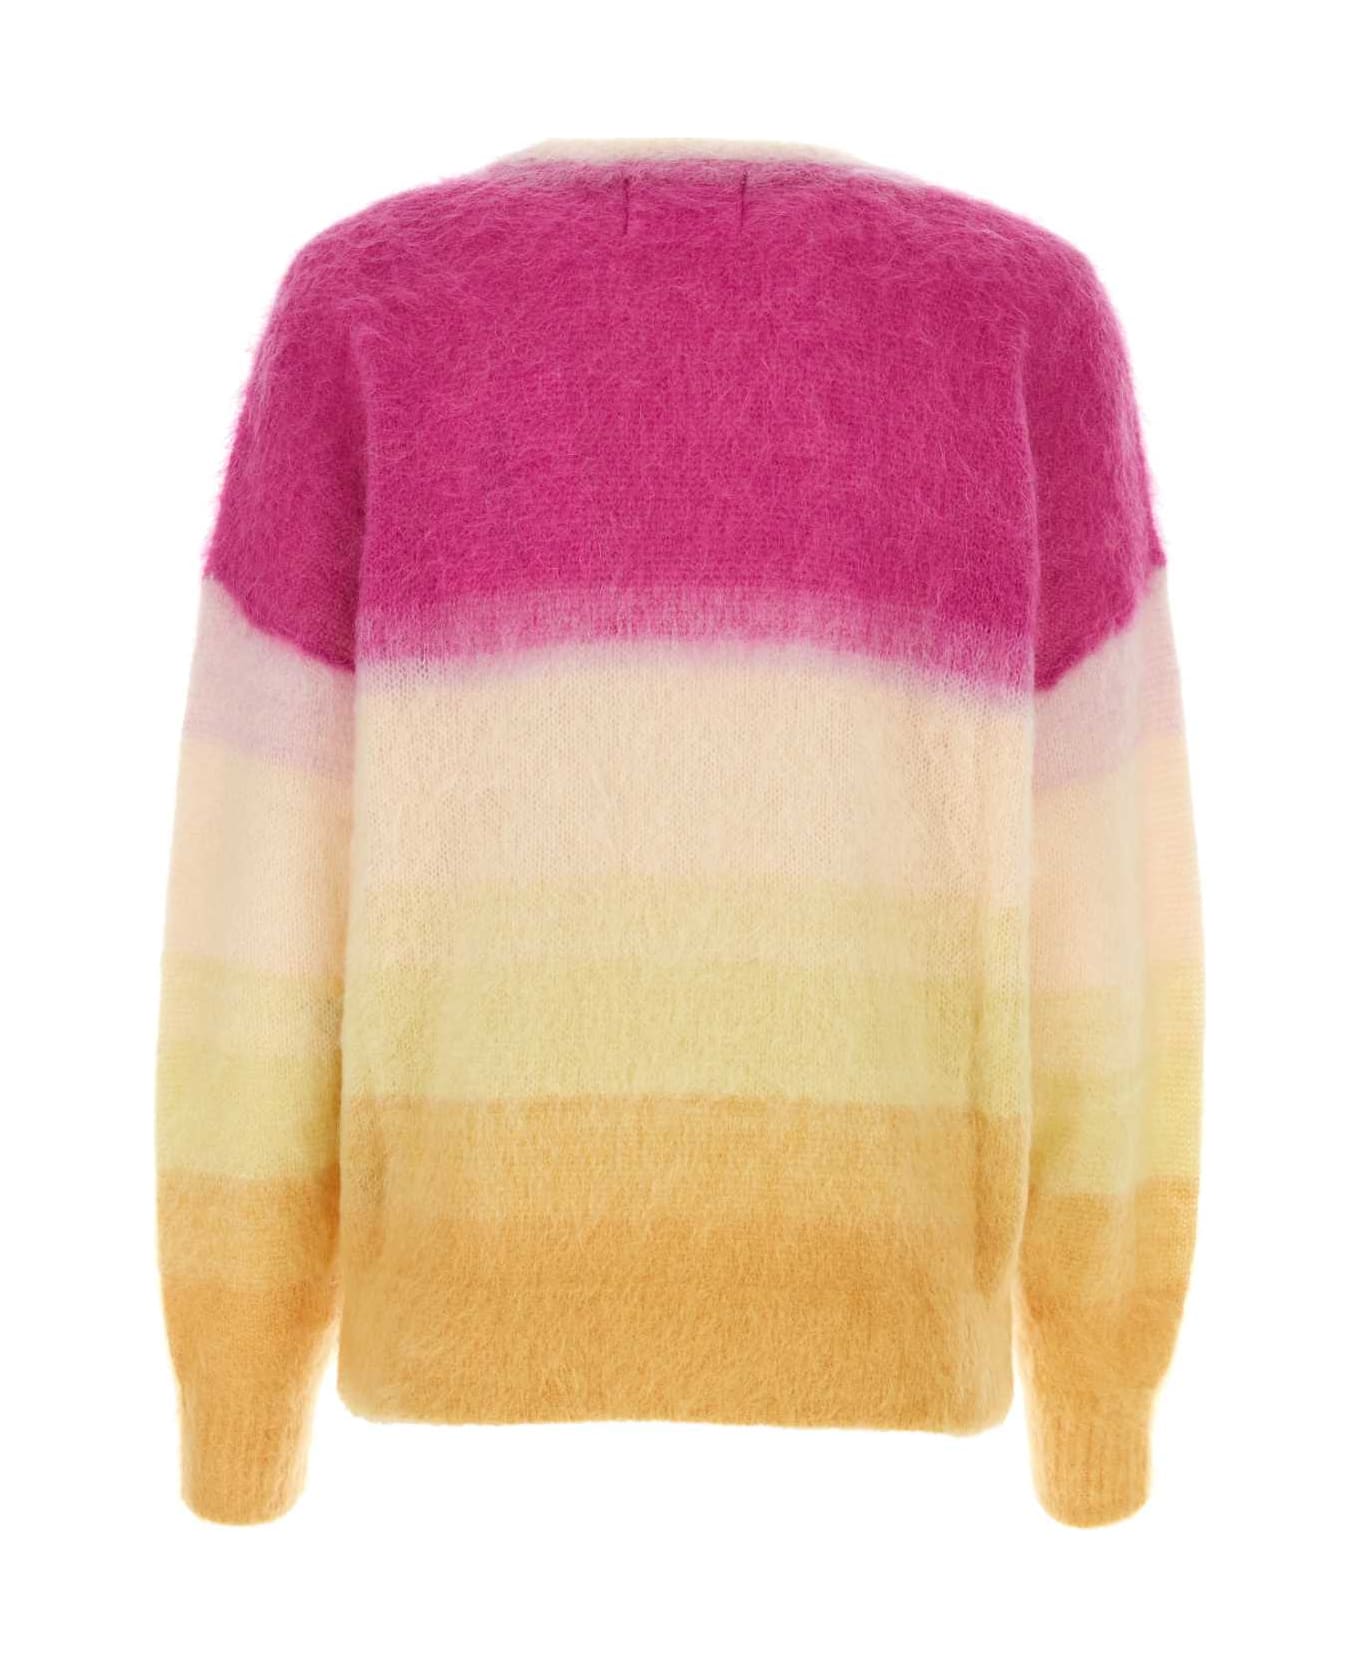 Marant Étoile Multicolor Mohair Blend Oversize Drussell Sweater - FUSHIAYELLOW